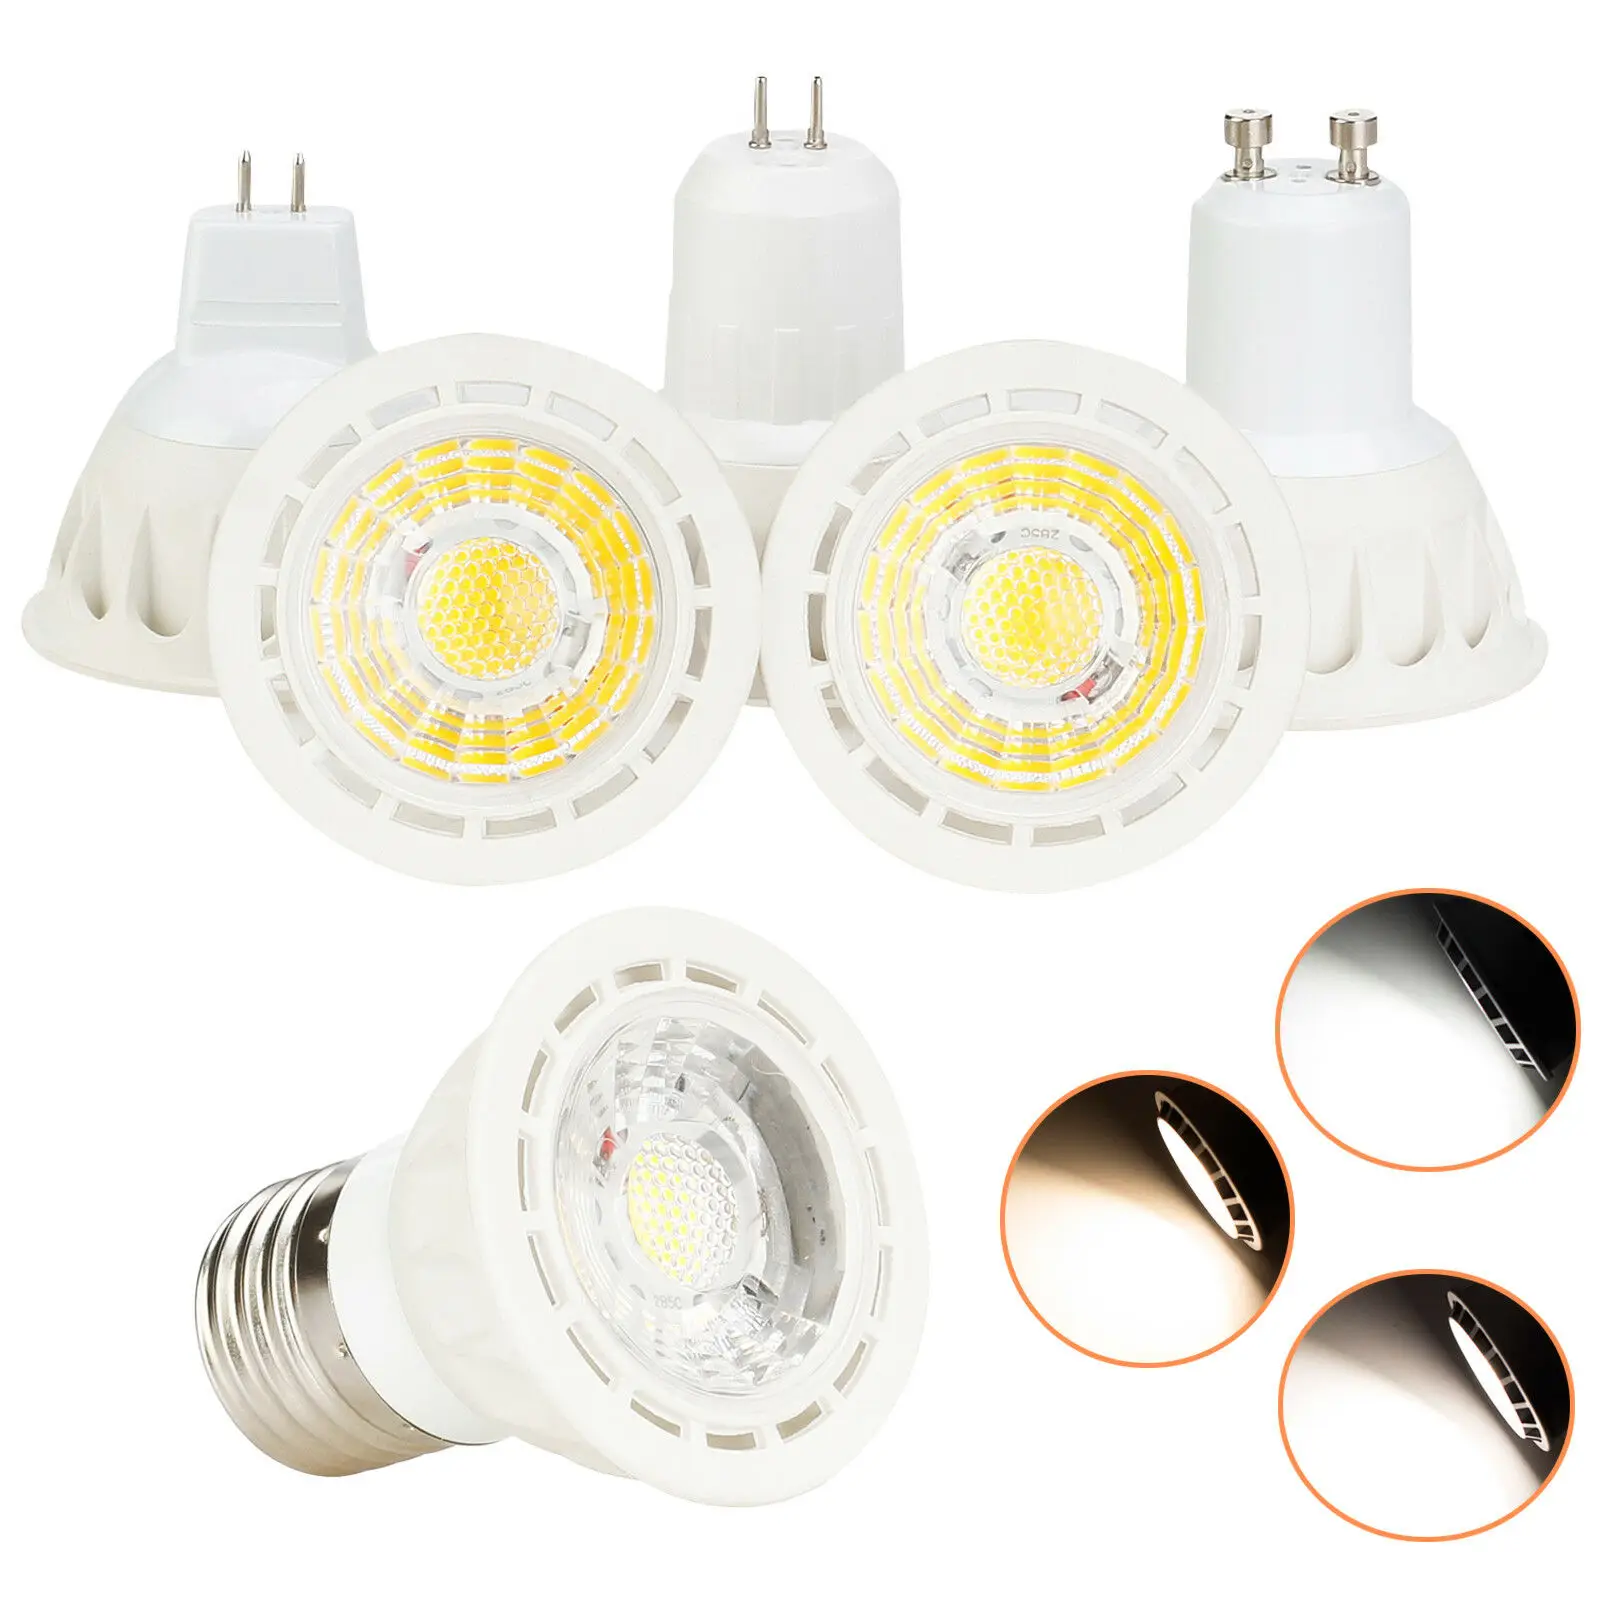 10X E26 E27 MR16 GU10 GU5.3 F Lens Spotlight LED AC110V 220V Dimmable DC12V Spot Light Bulbs Bright Cool Warm White Lamp